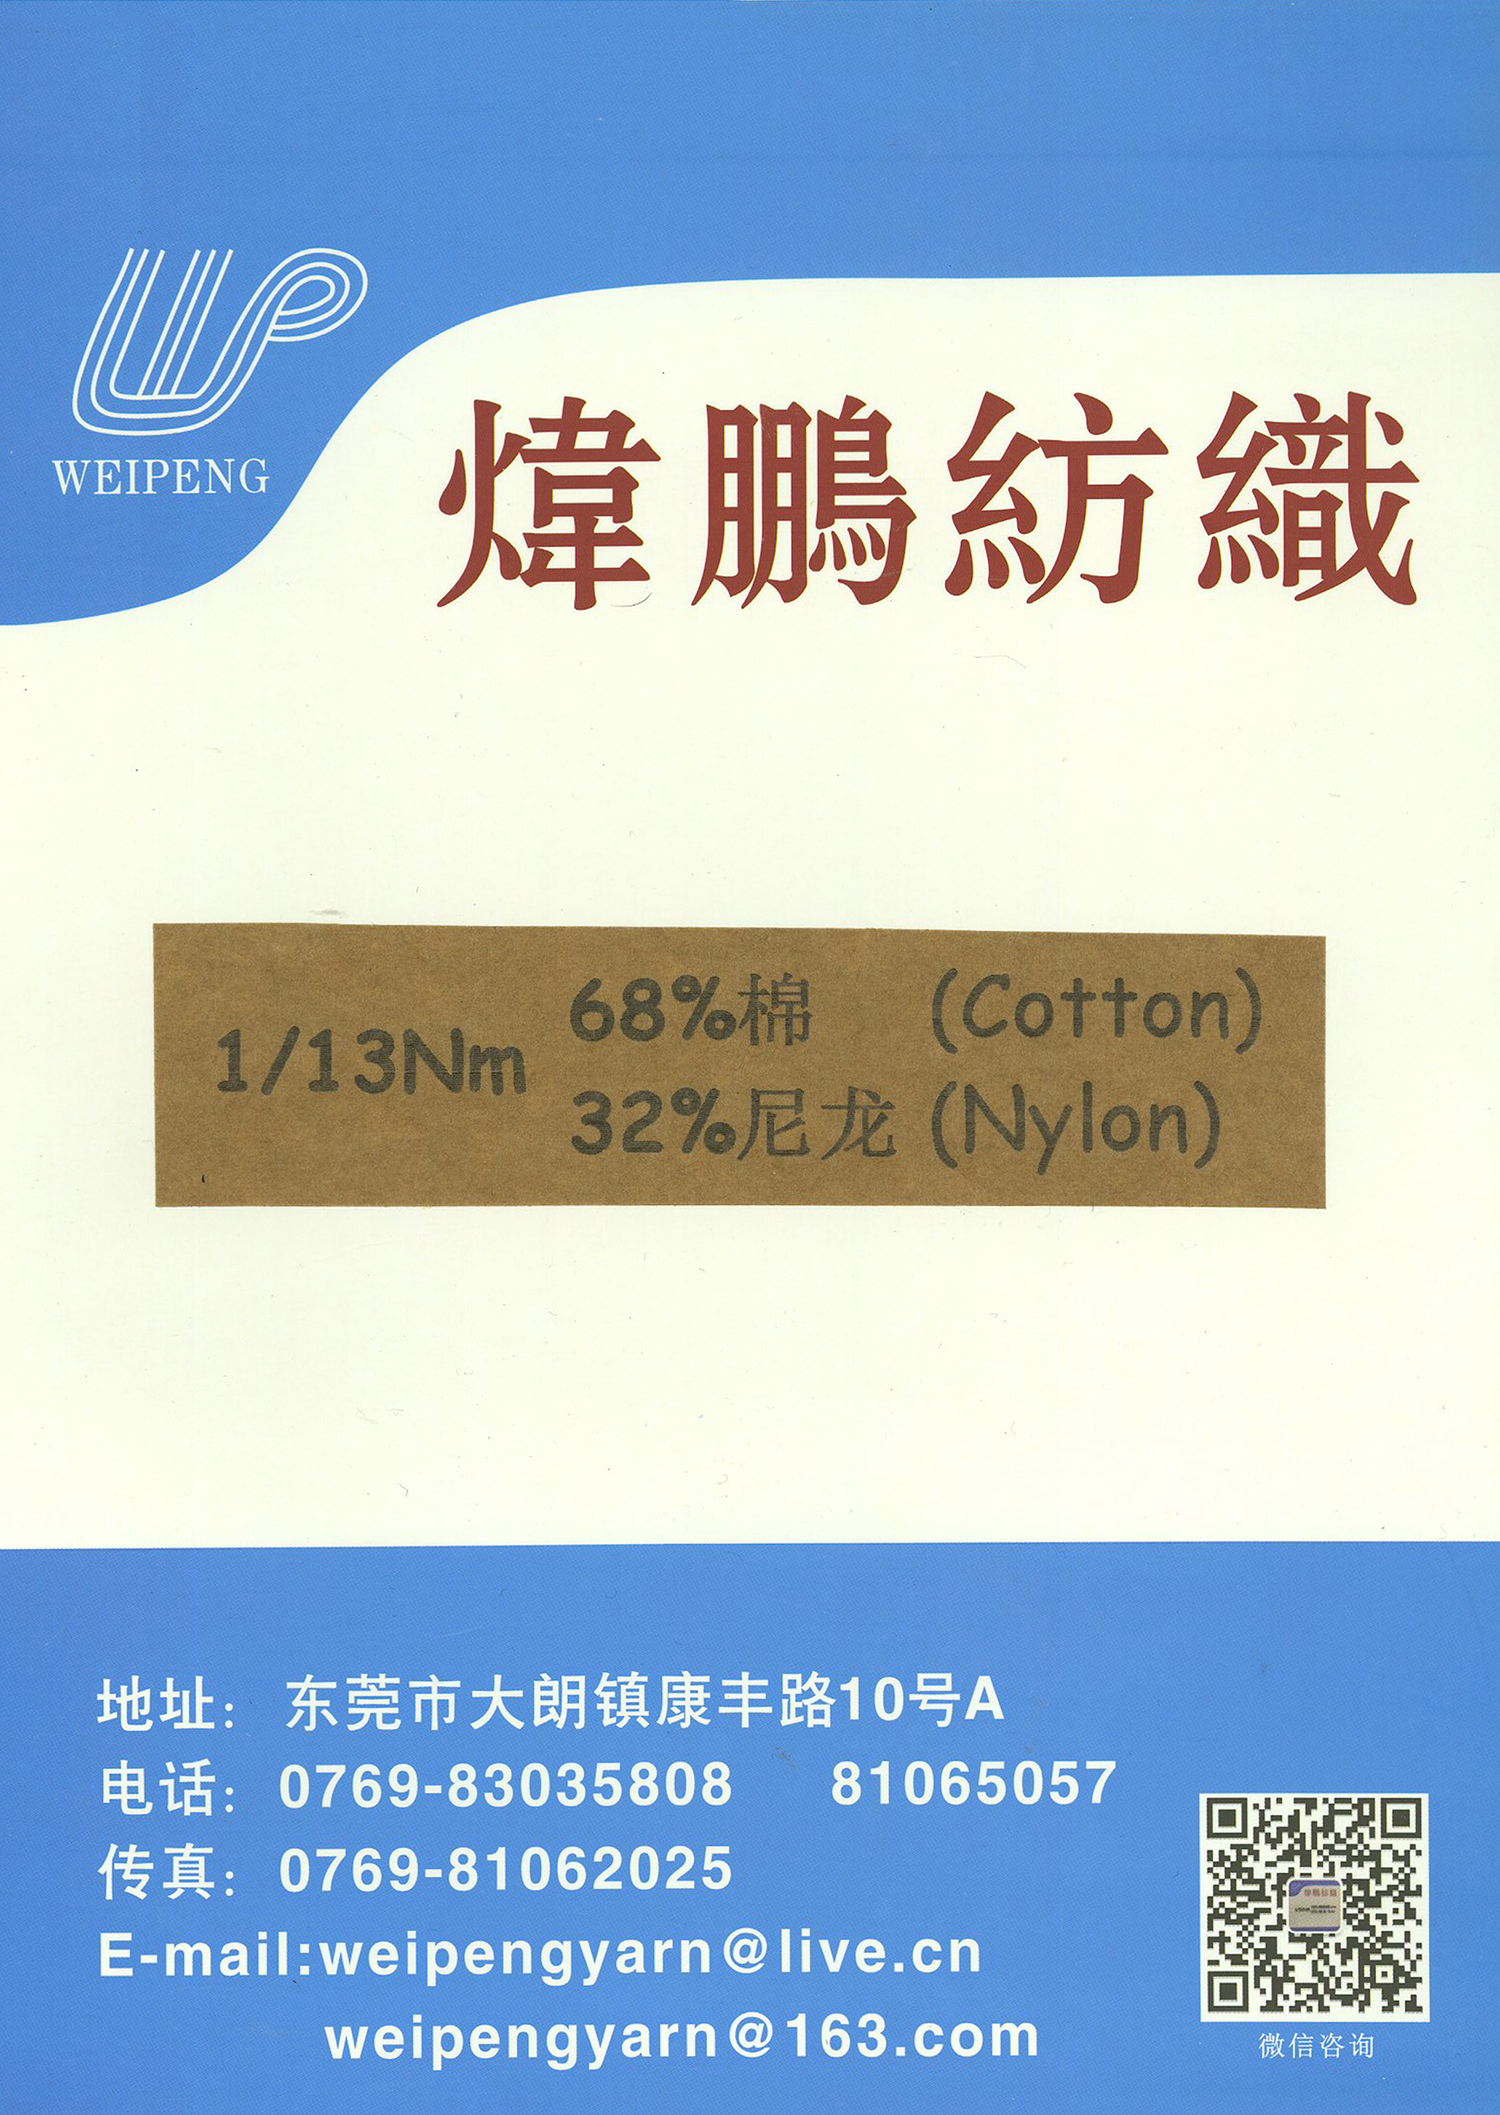 1/13Nm  68%棉  32%尼龙